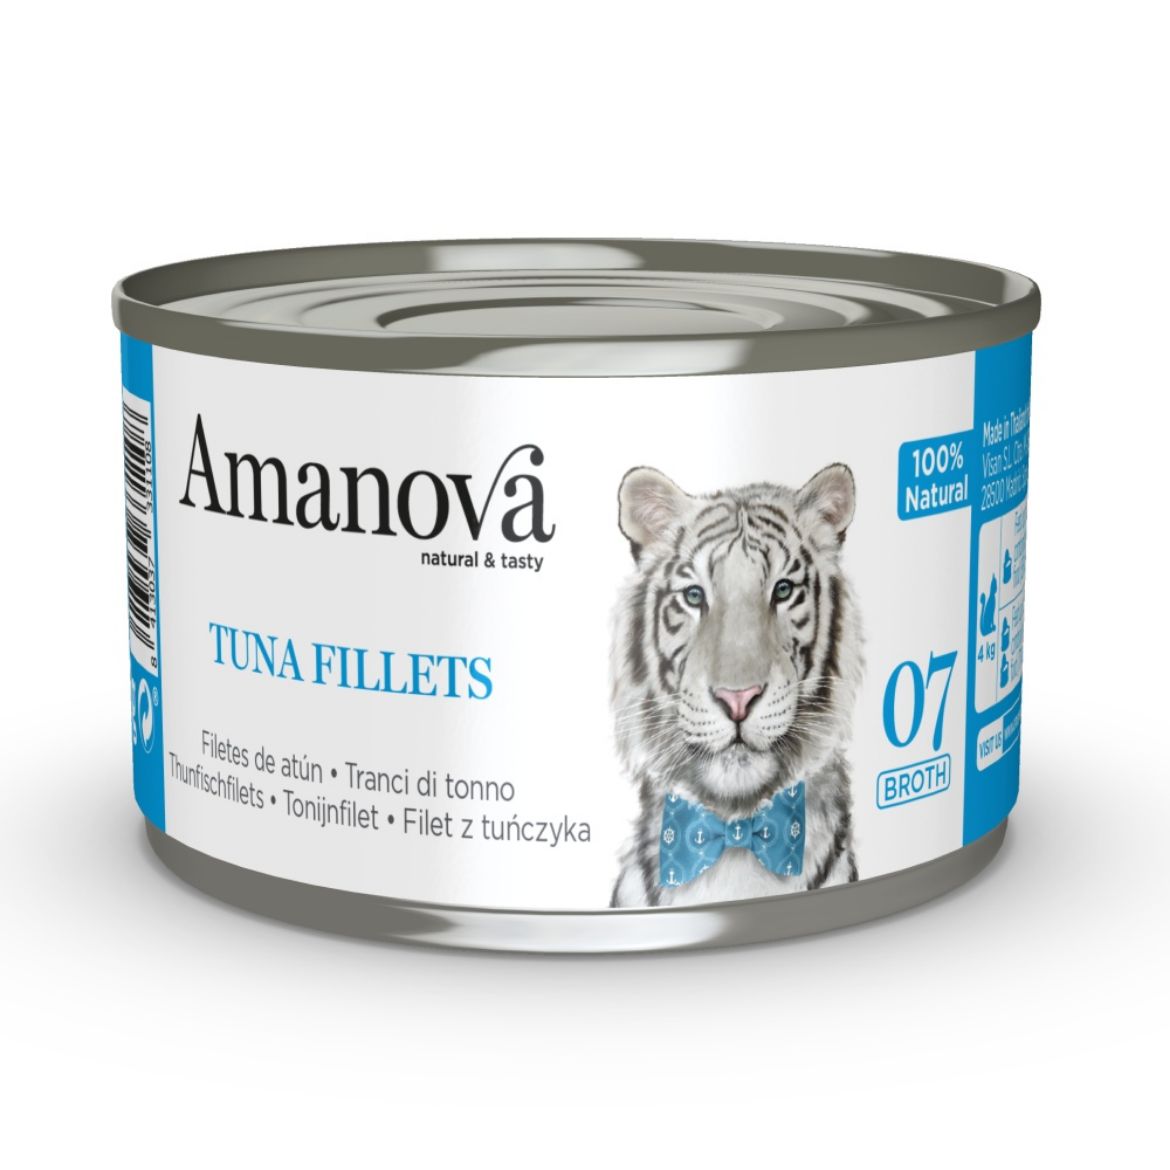 Amanova Canned Cat Tuna Fillets Broth - 70g